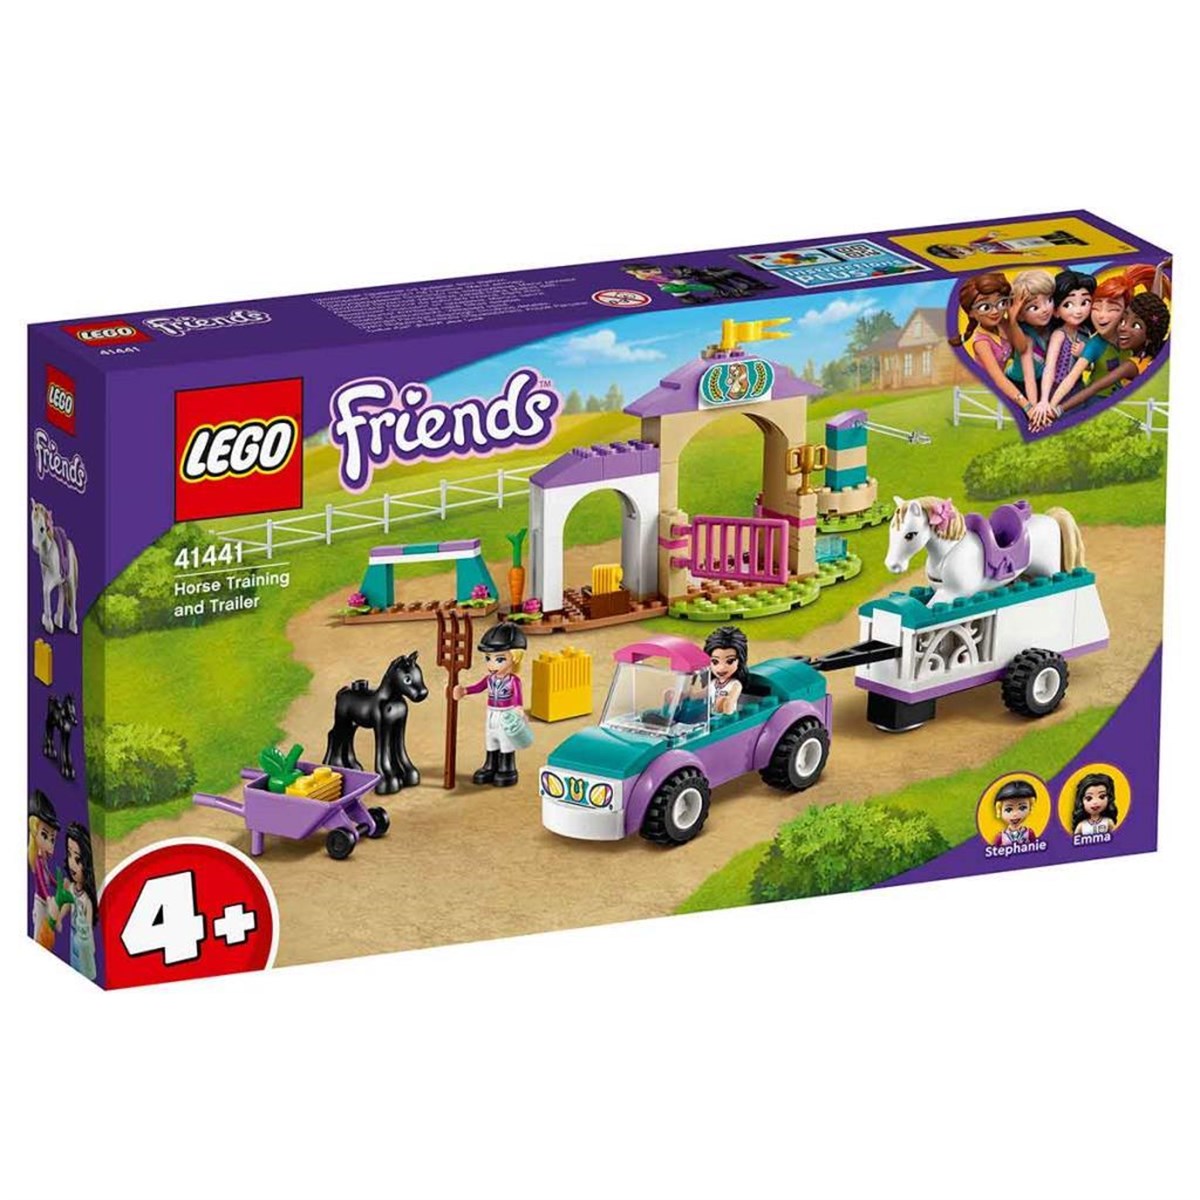 Lego Friends At Eğitmeni ve At Eğitimi 41441 | Toysall